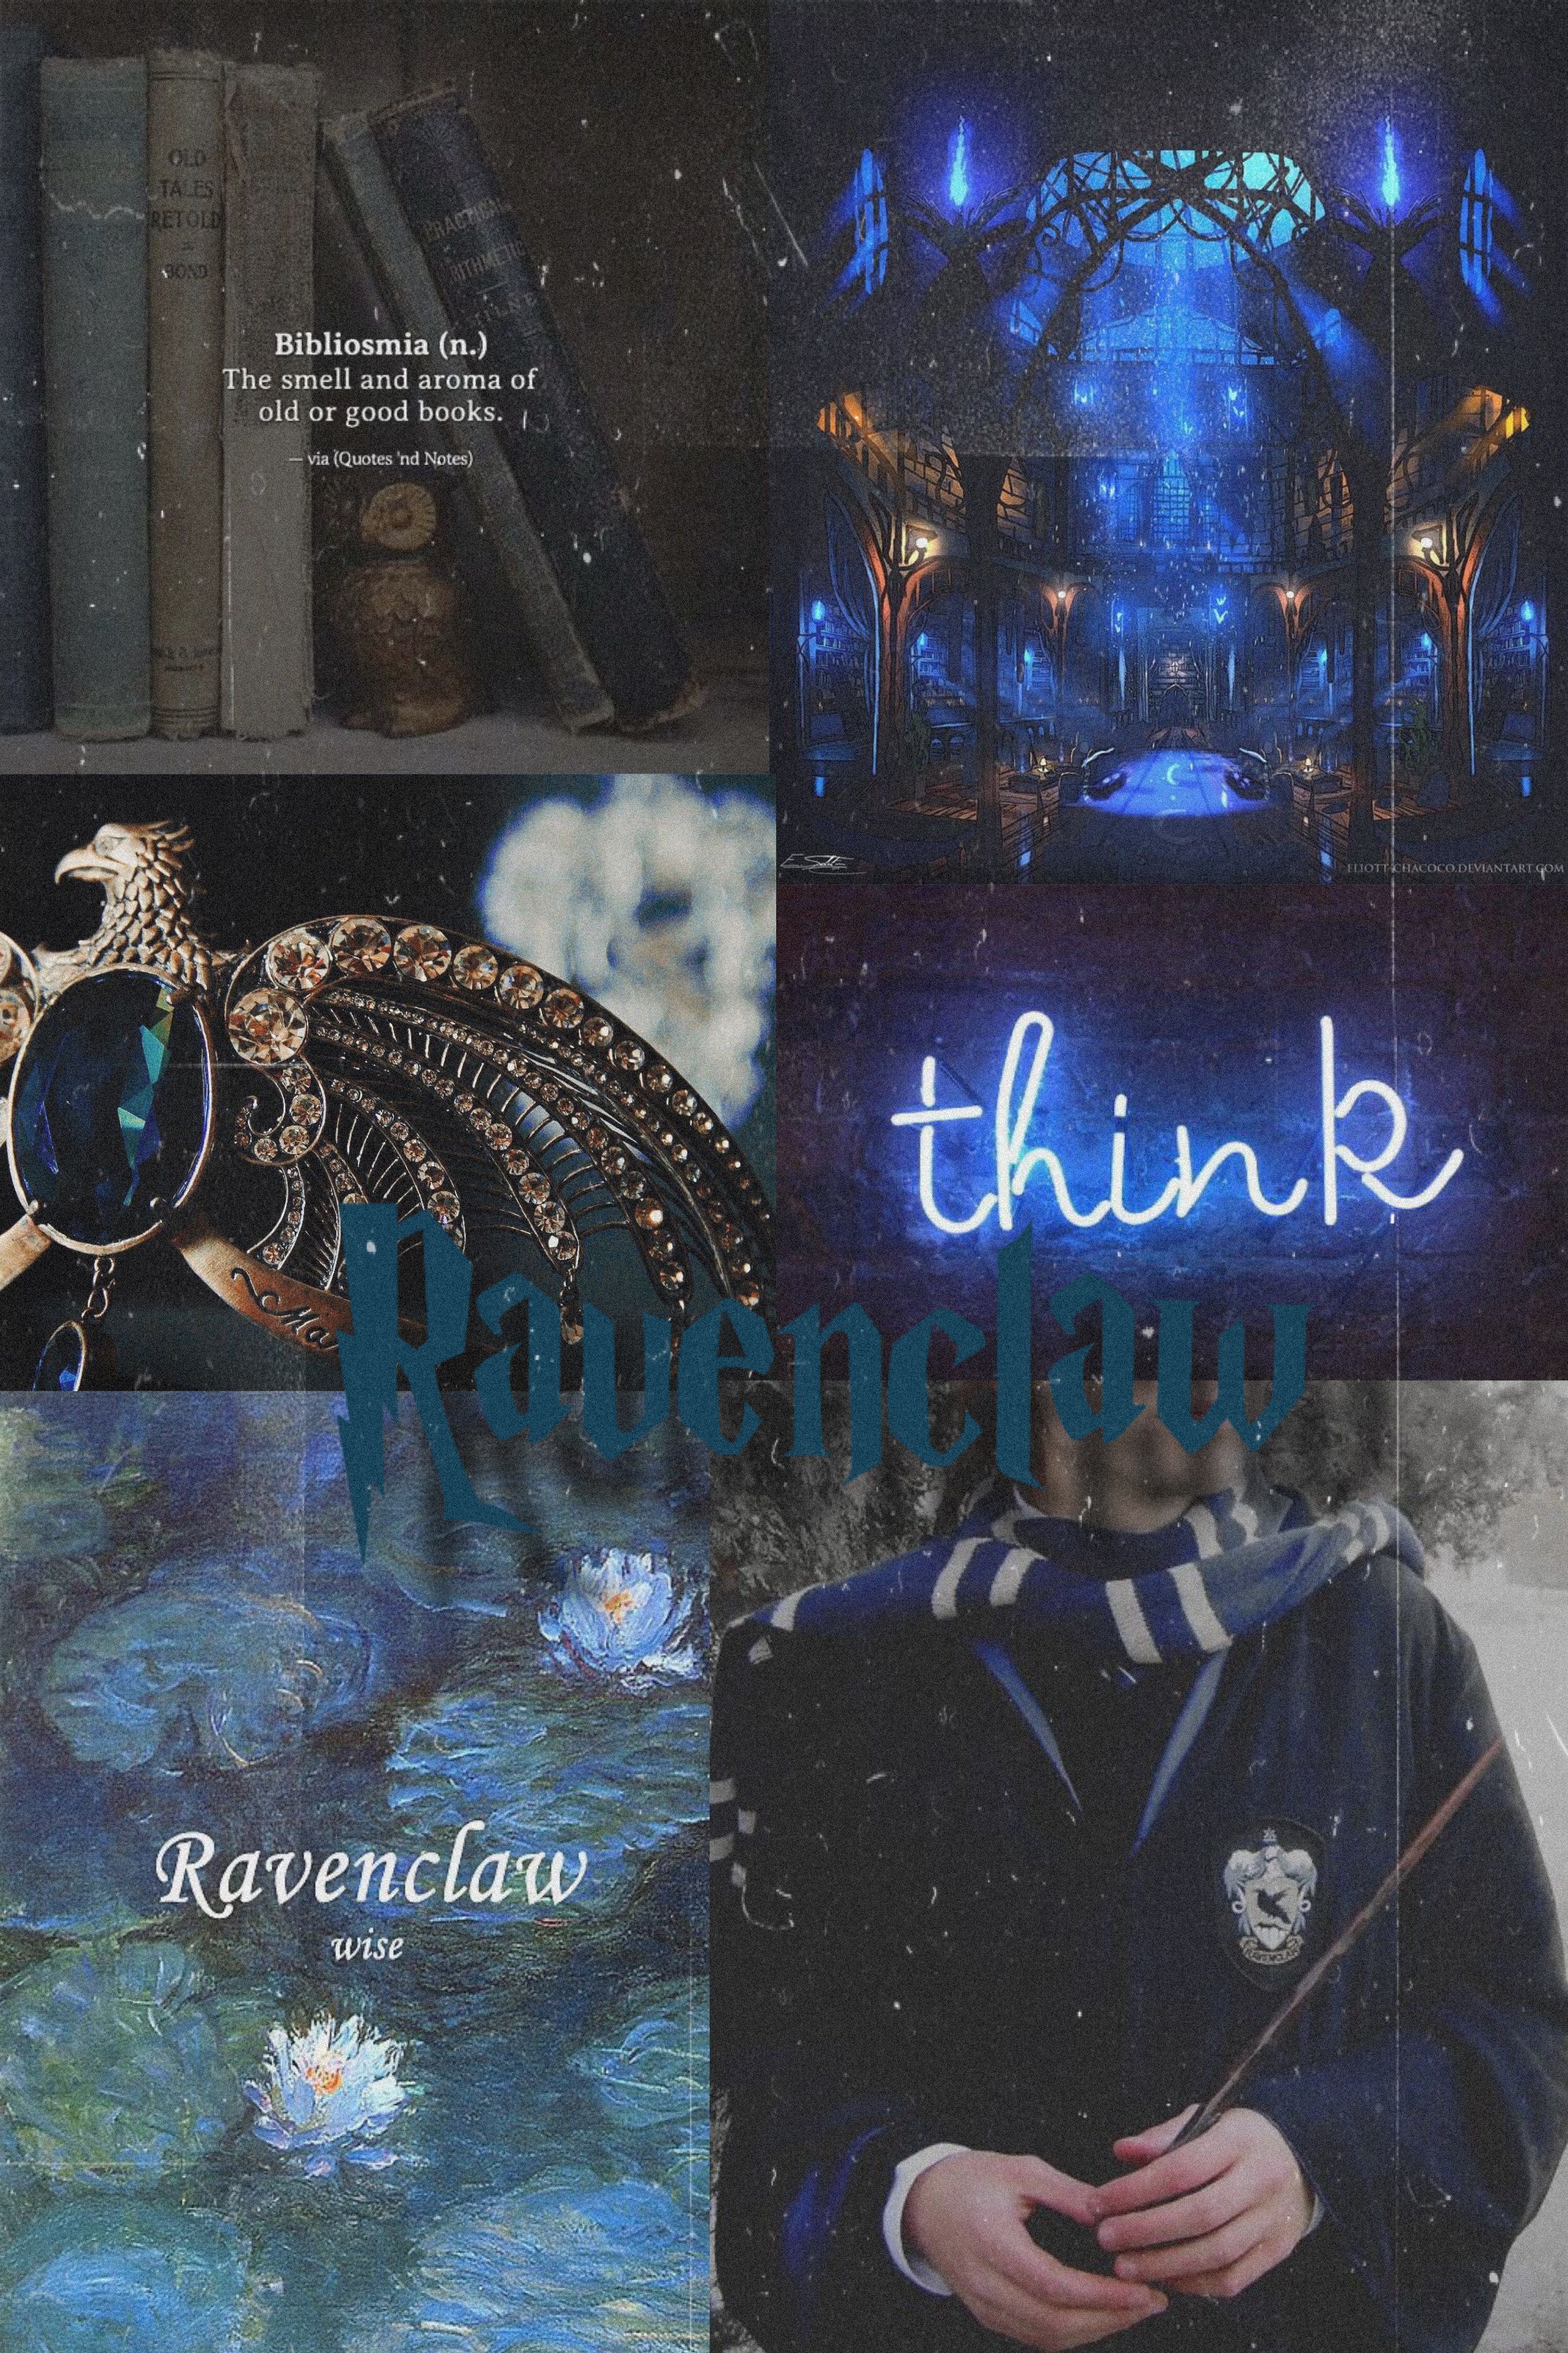 Ravenclaw aesthetic wallpaper. Ravenclaw aesthetic, Harry potter wallpaper, Good books